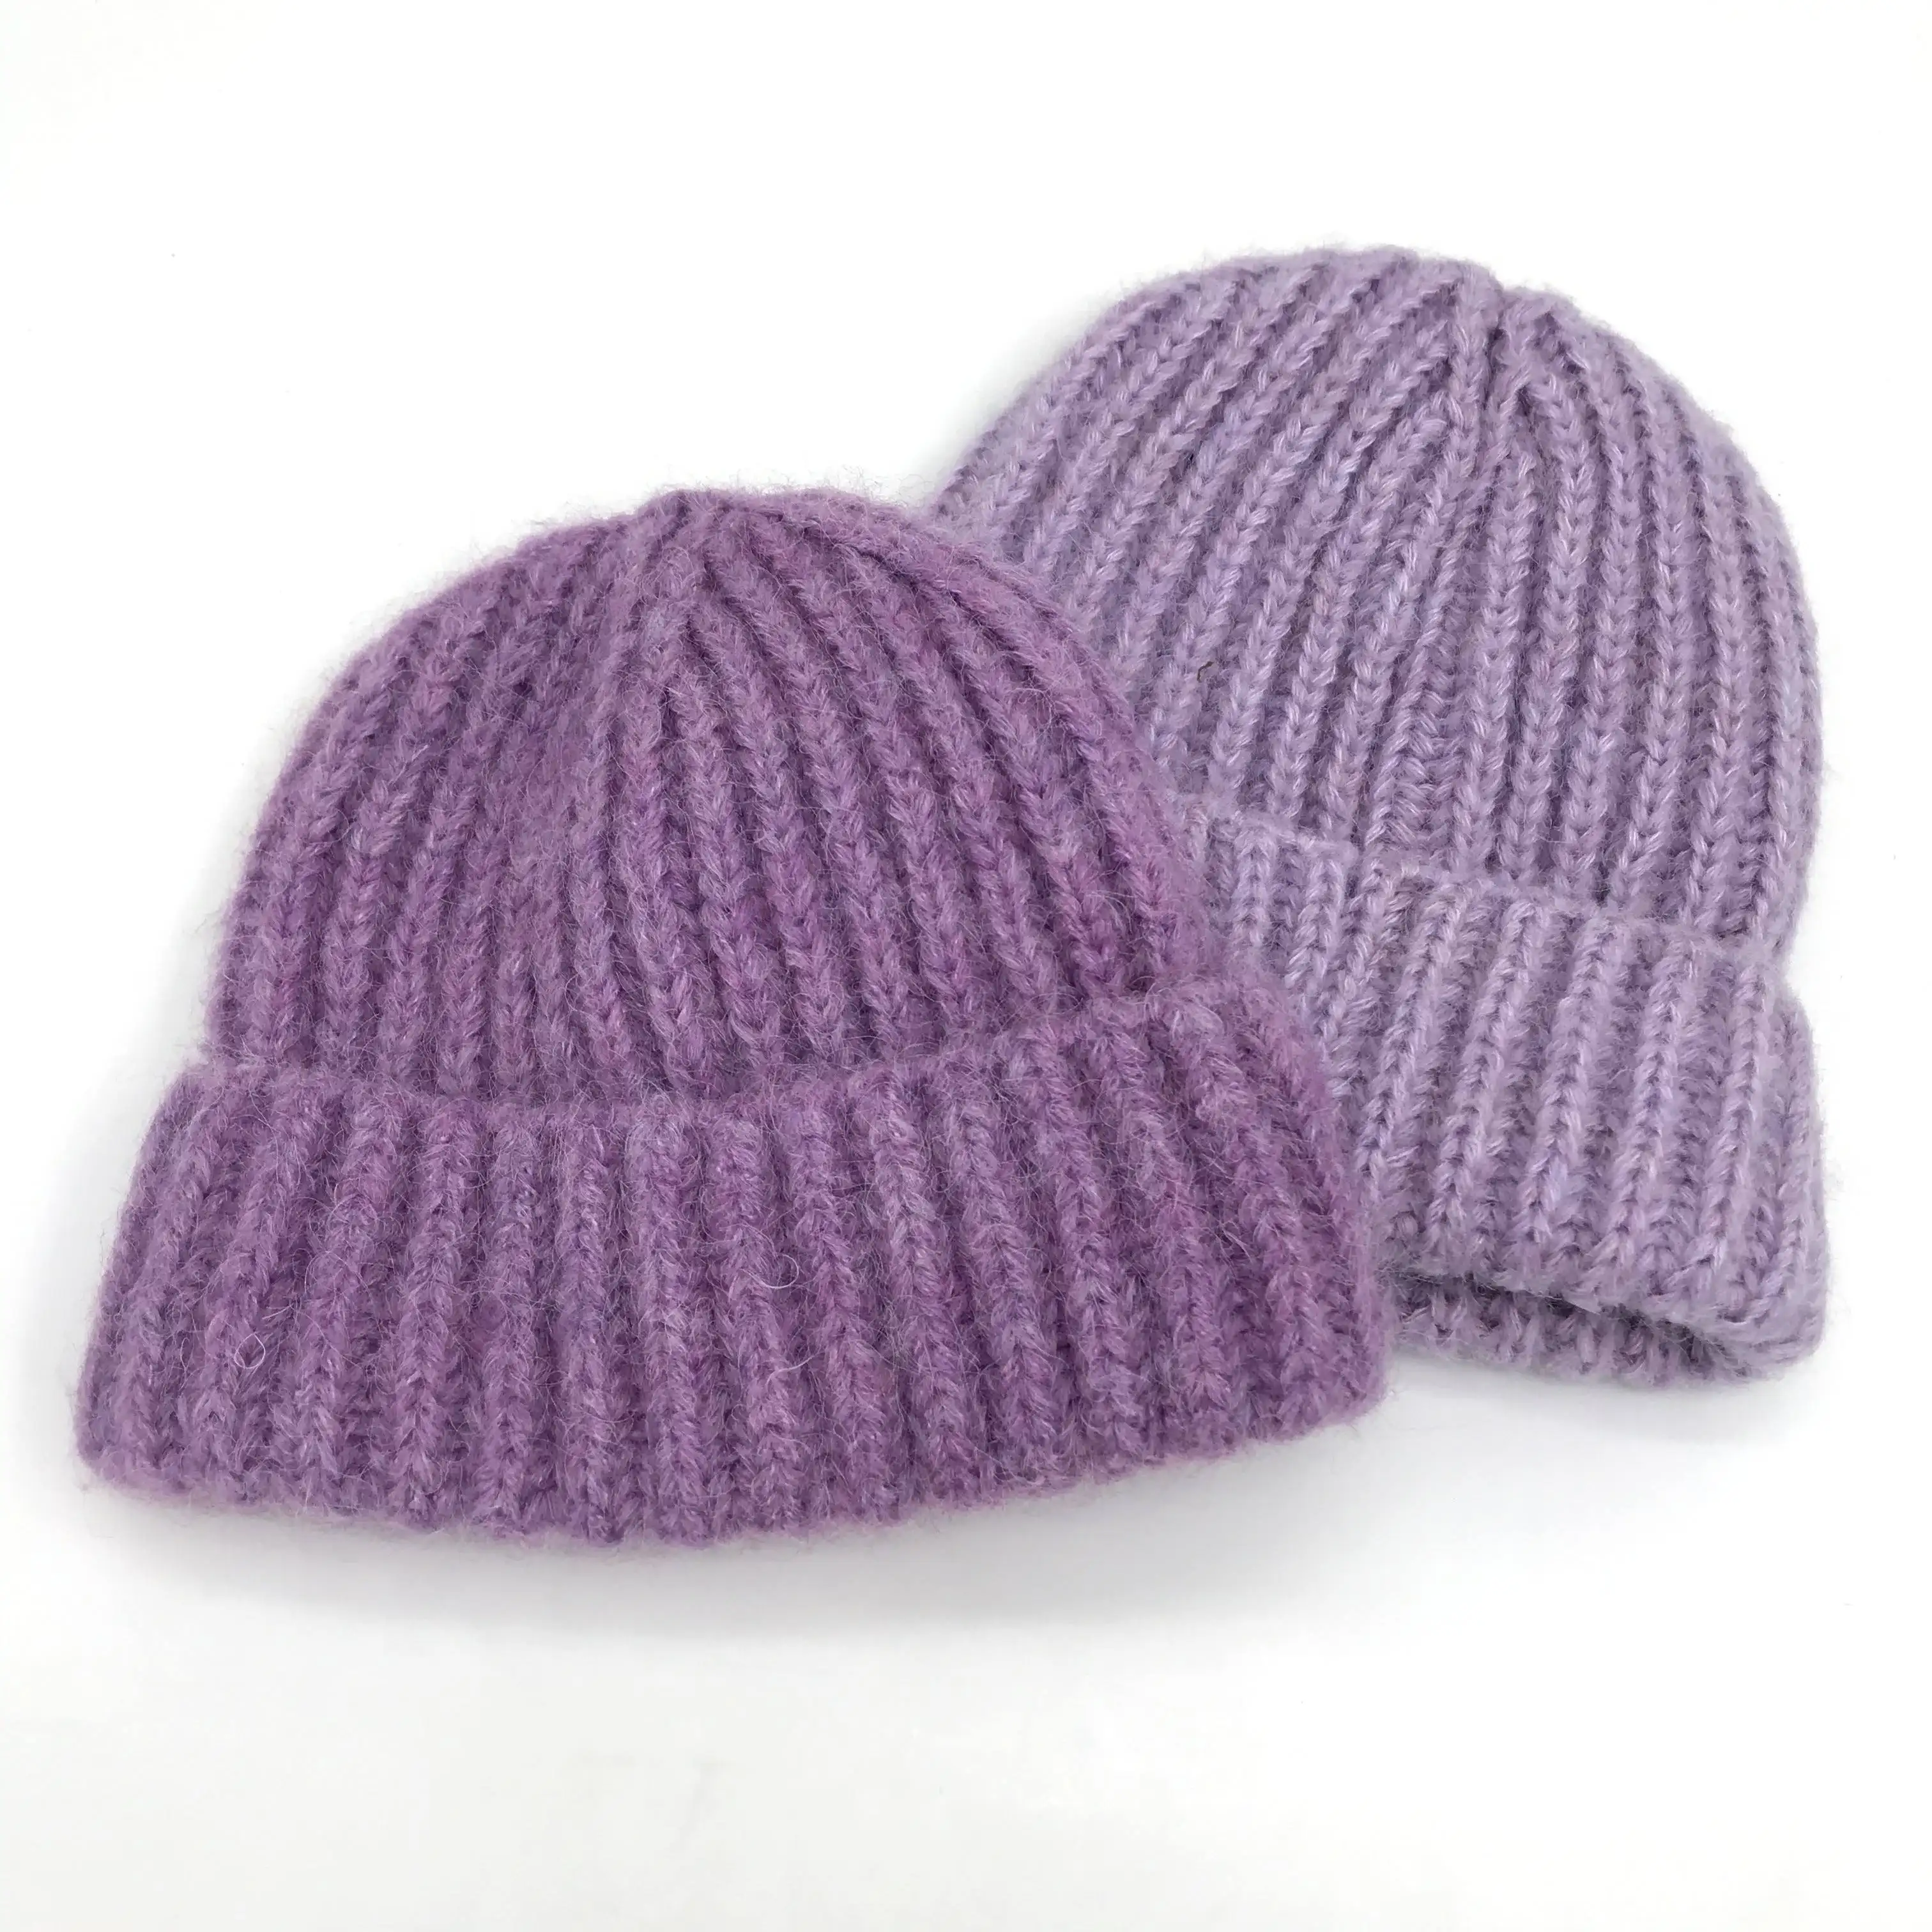 Moda novo estilo malha gorro chapéu worm mohair material cochilado fio liso inverno chapéu